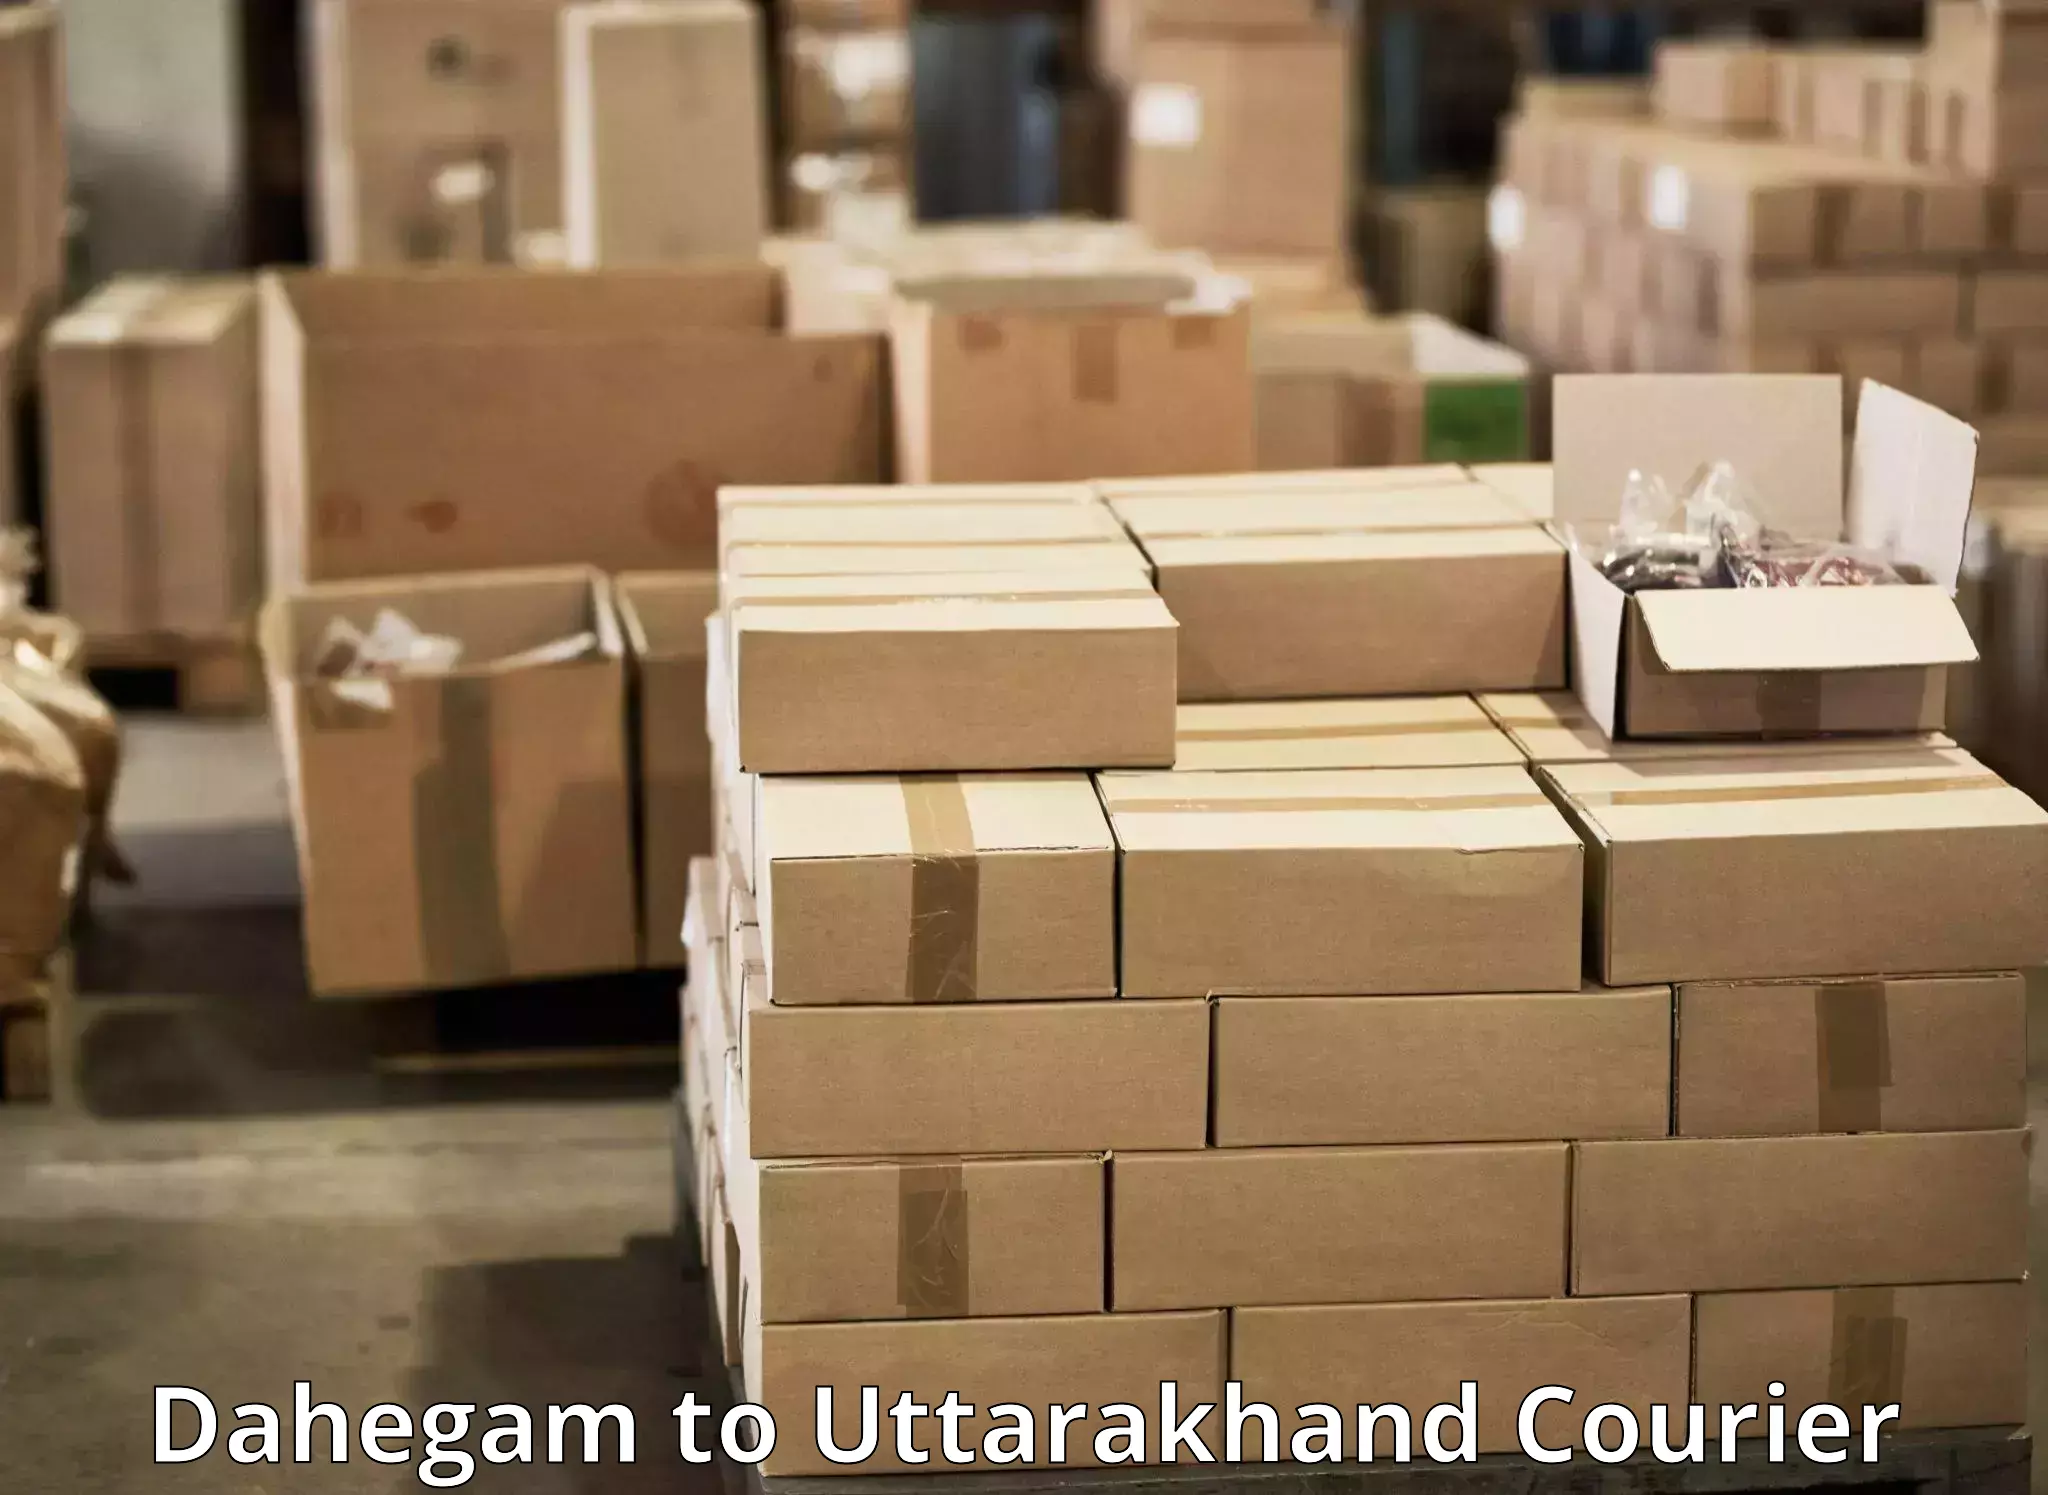 Courier service innovation Dahegam to Haridwar